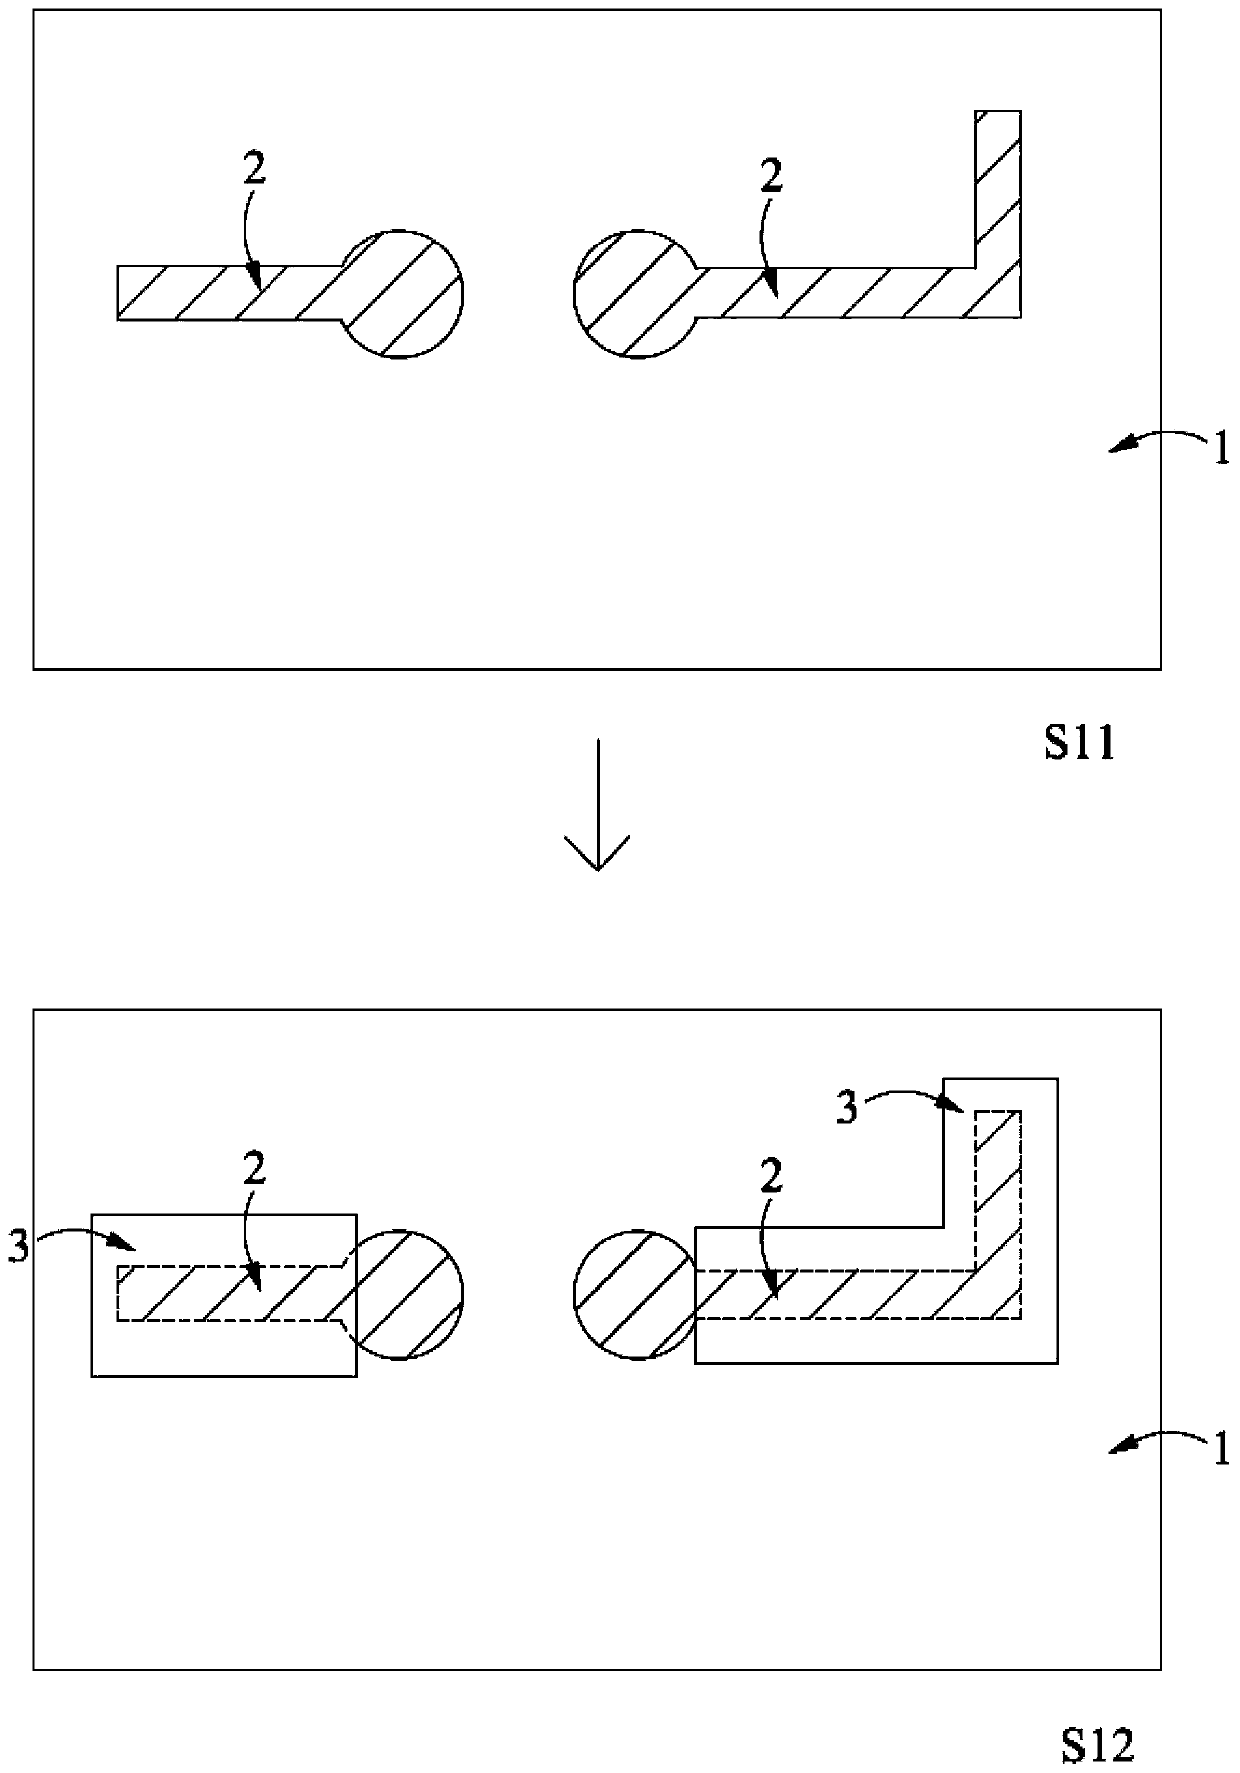 PCB manufacturing method